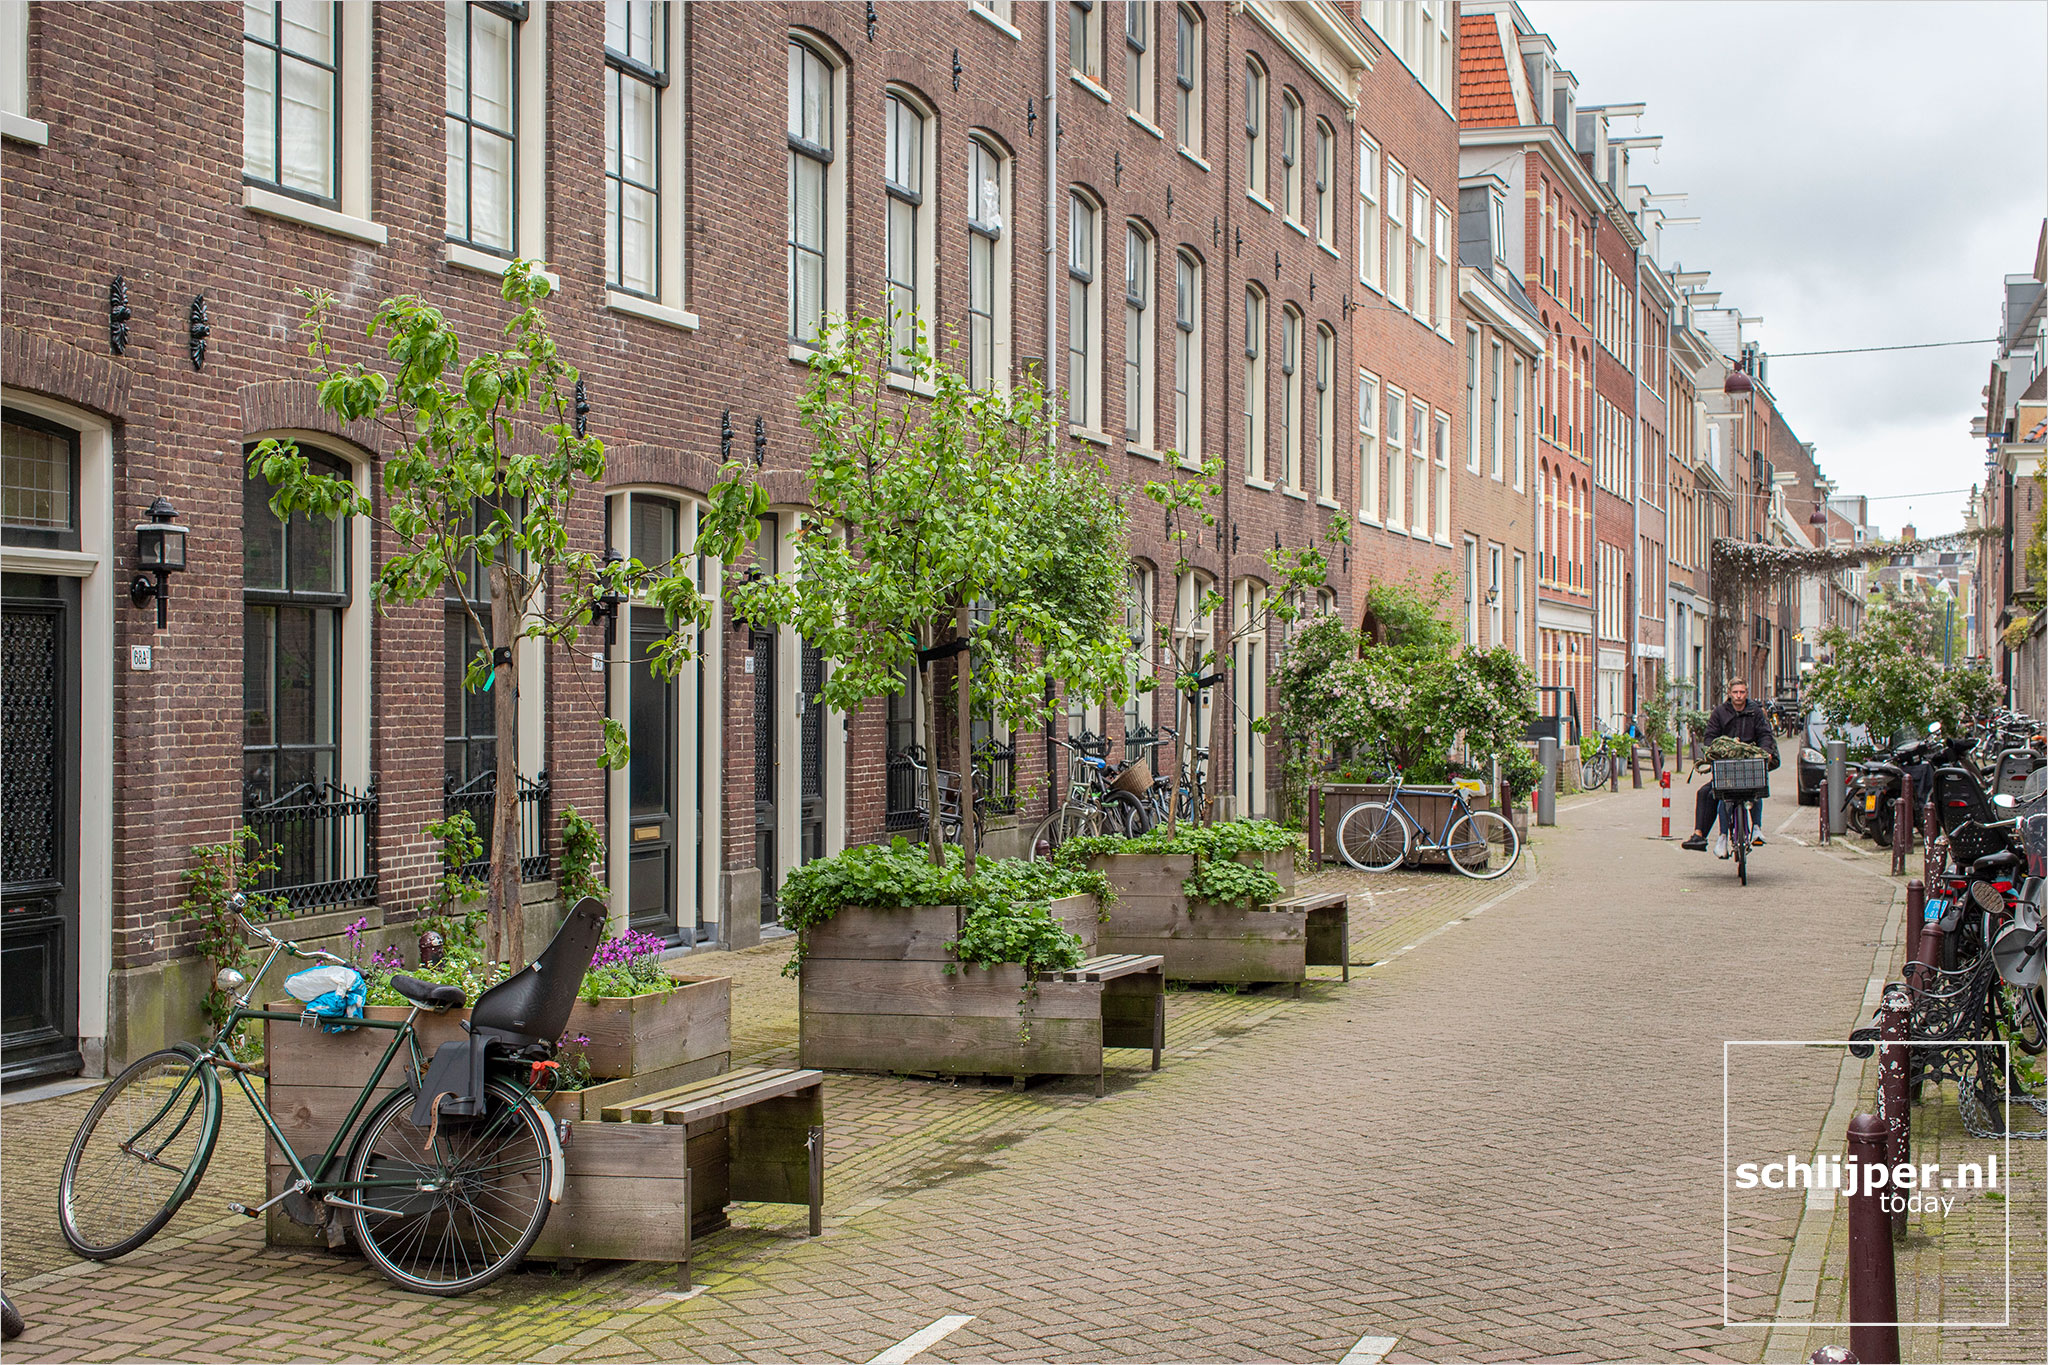 The Netherlands, Amsterdam, 22 mei 2021